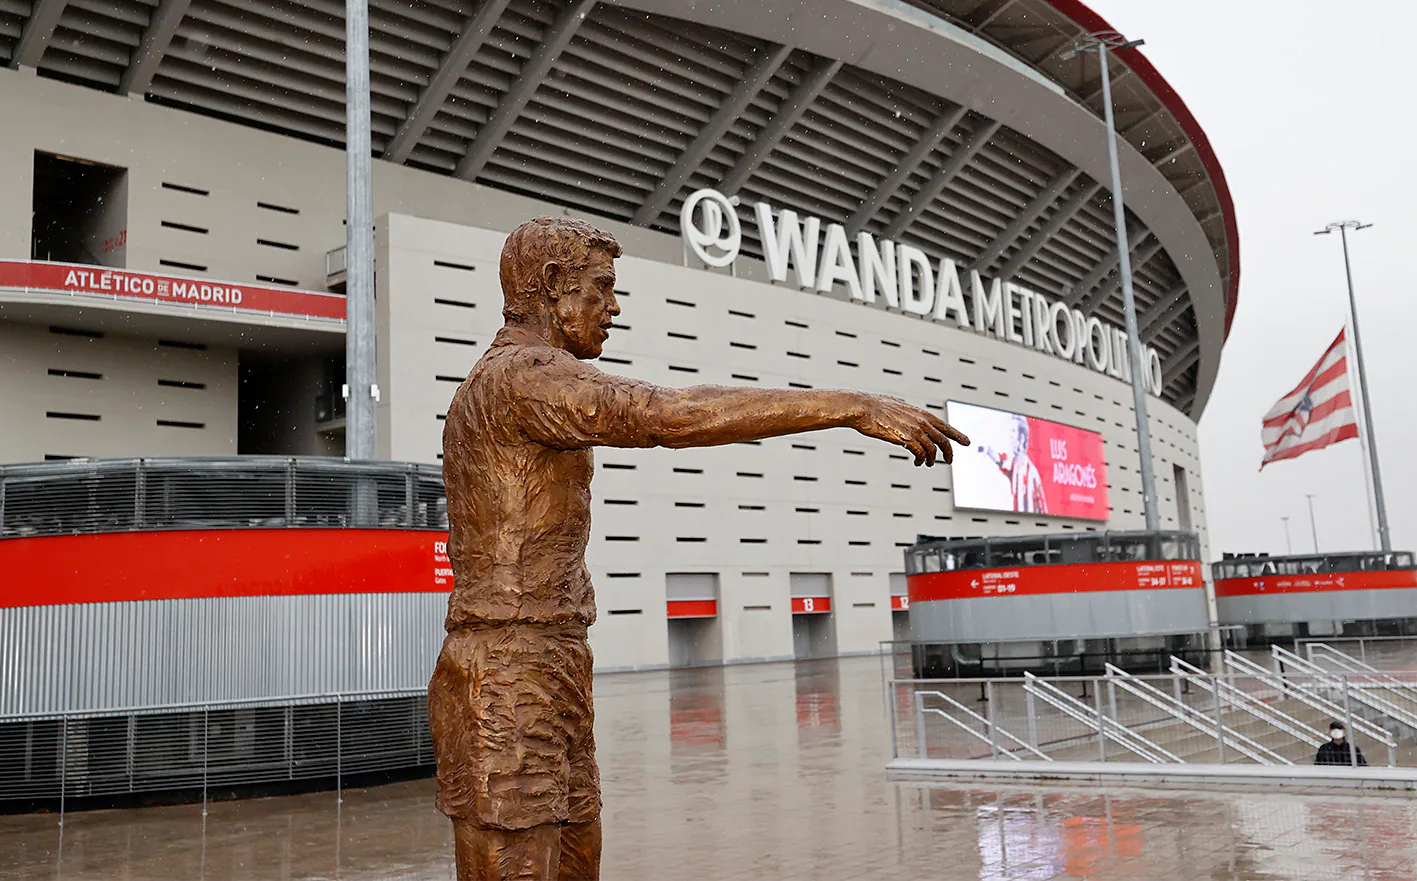 La estatua de Luis Aragonés ya luce en el Wanda Metropolitano